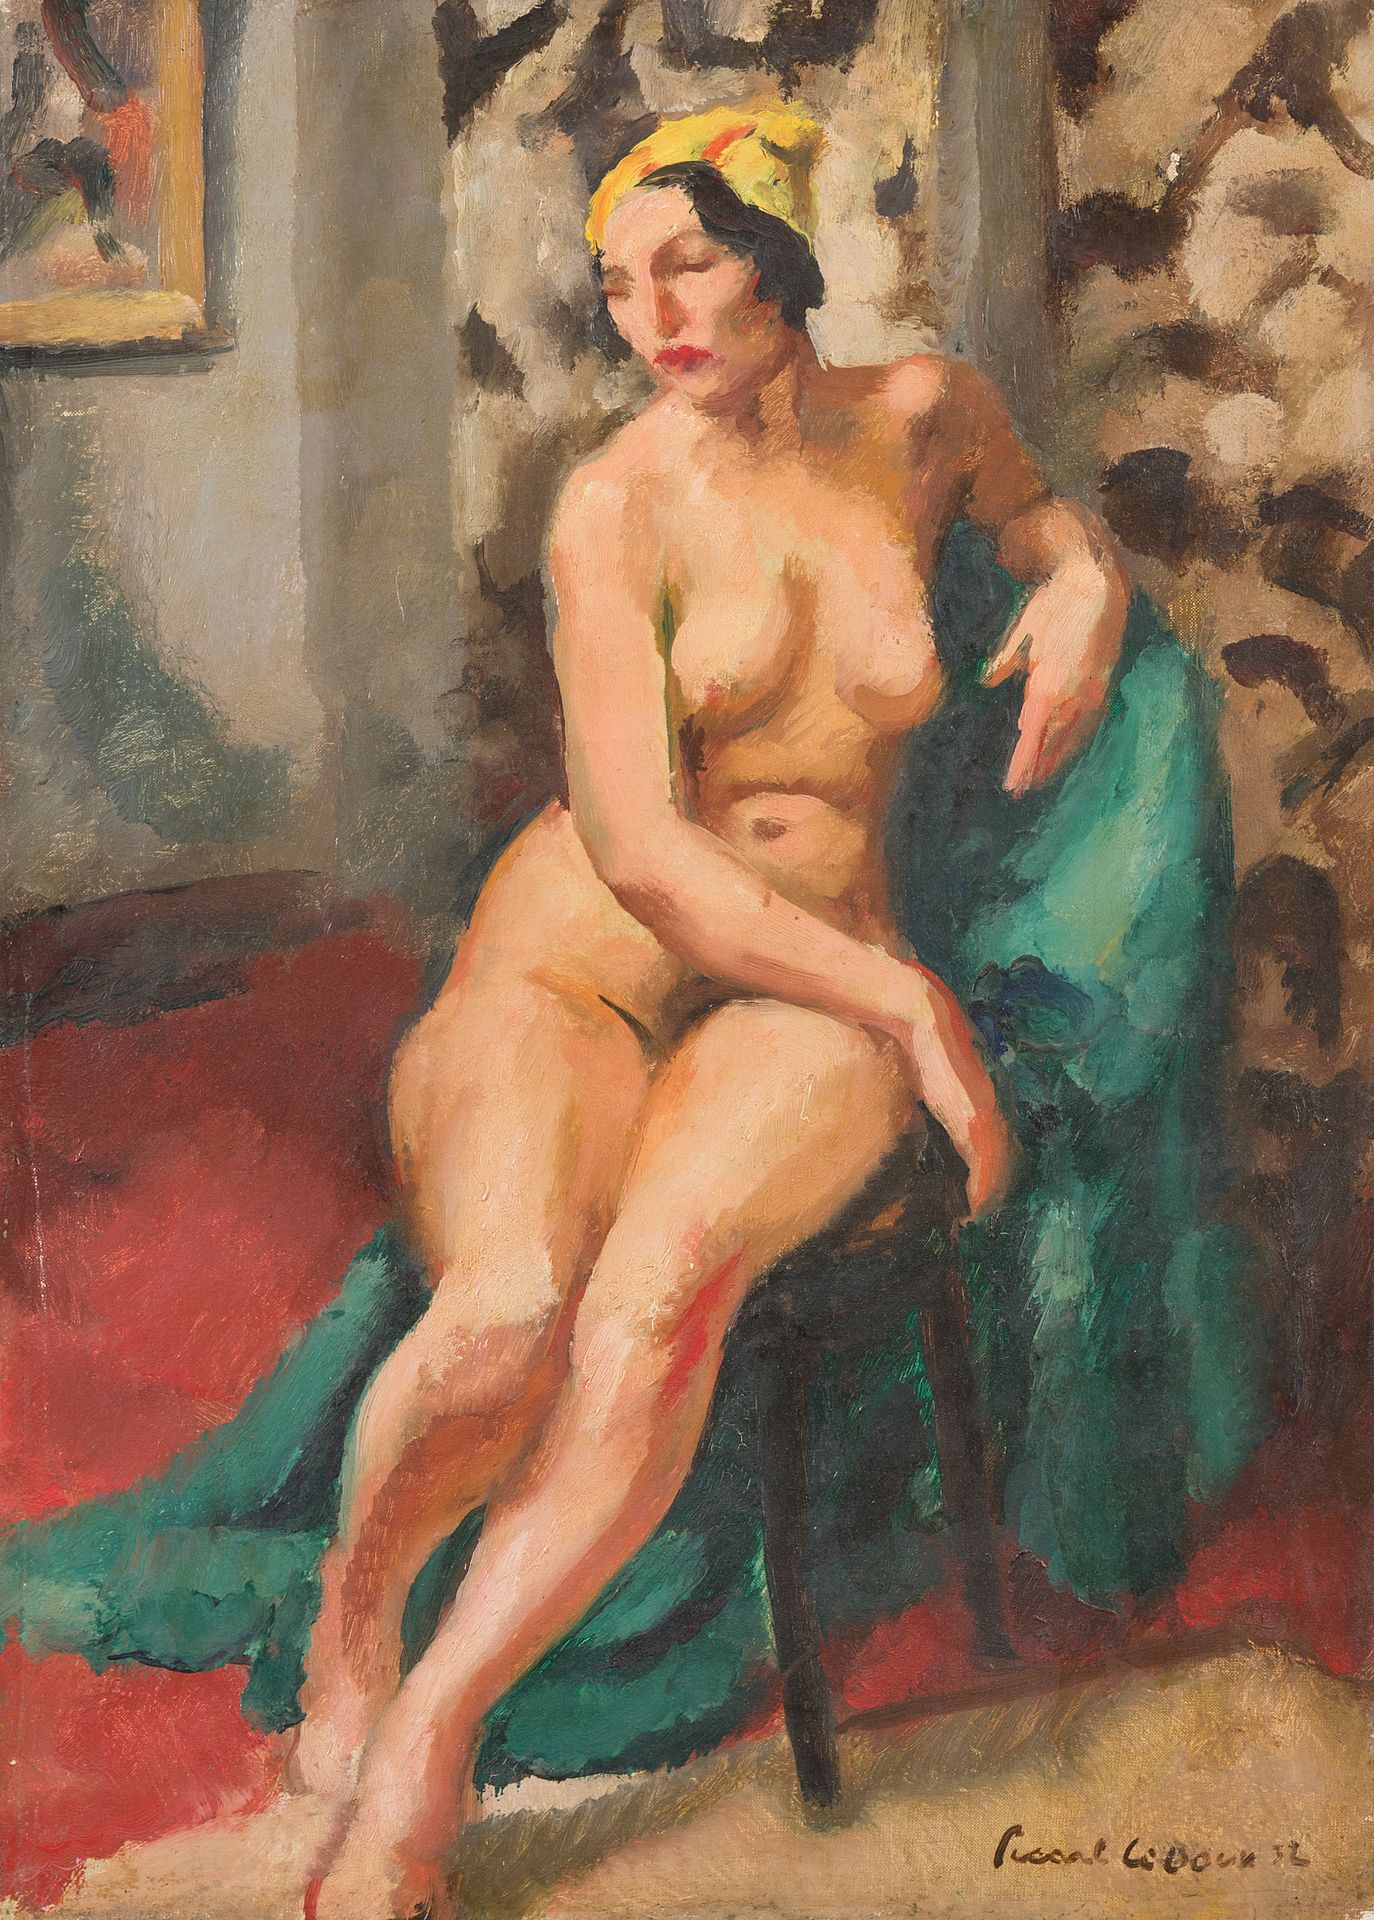 Null 查尔斯-皮卡特-勒杜(1881-1959)
坐着的裸体，1932年
布面油画，右下角有签名
46 x 33 cm